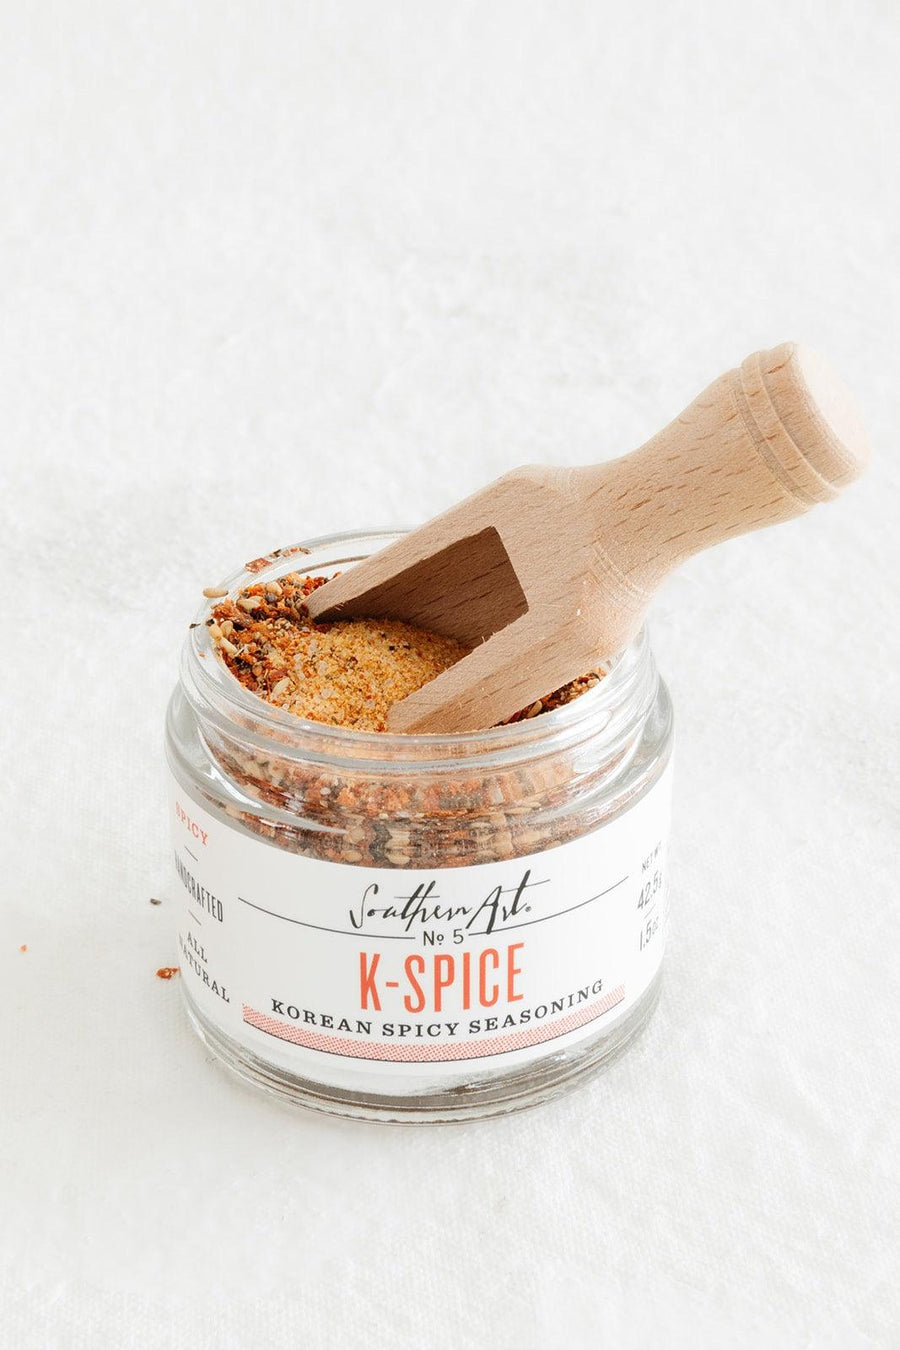 K-Spice Seasoning - Southern Art Co.